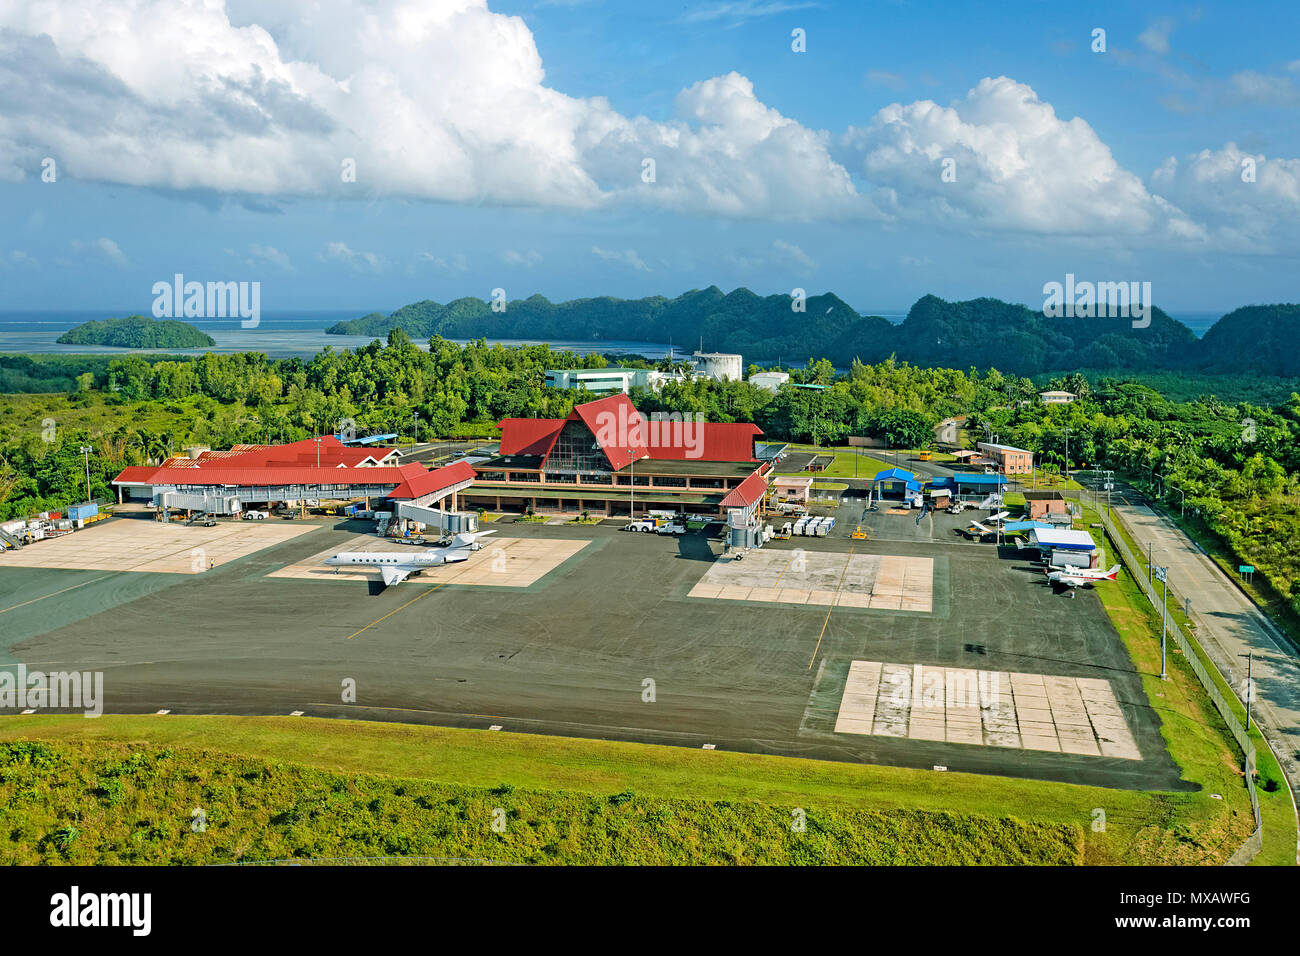 Luftaufnahme vom Flughafen von Palau, Mikronesien, Asien | Aeropuerto de Palau, vista aérea, Micronesia, Asia Foto de stock